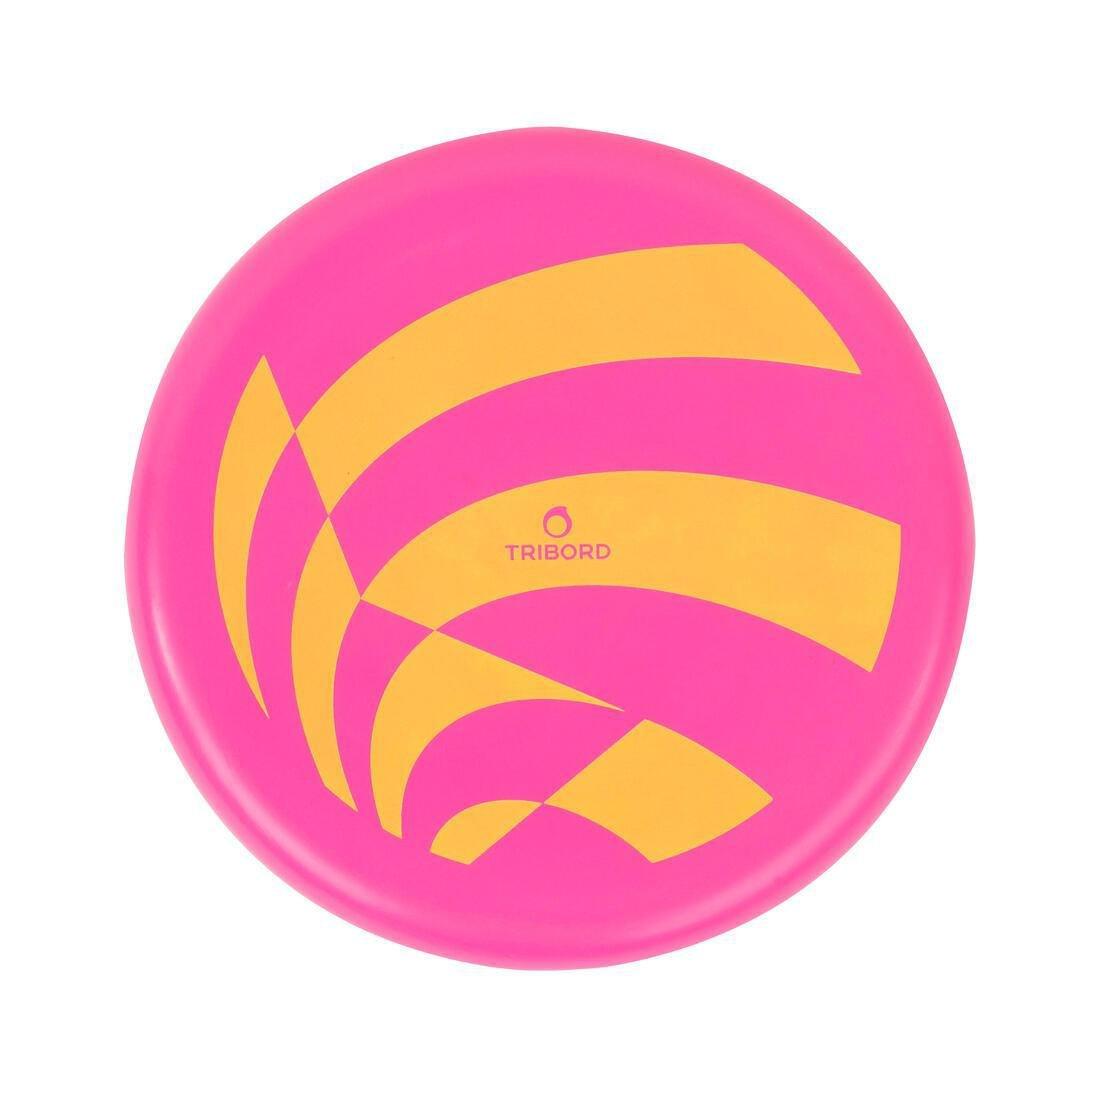 OLAIAN - Flying Disc - Pink Flag, Snow white